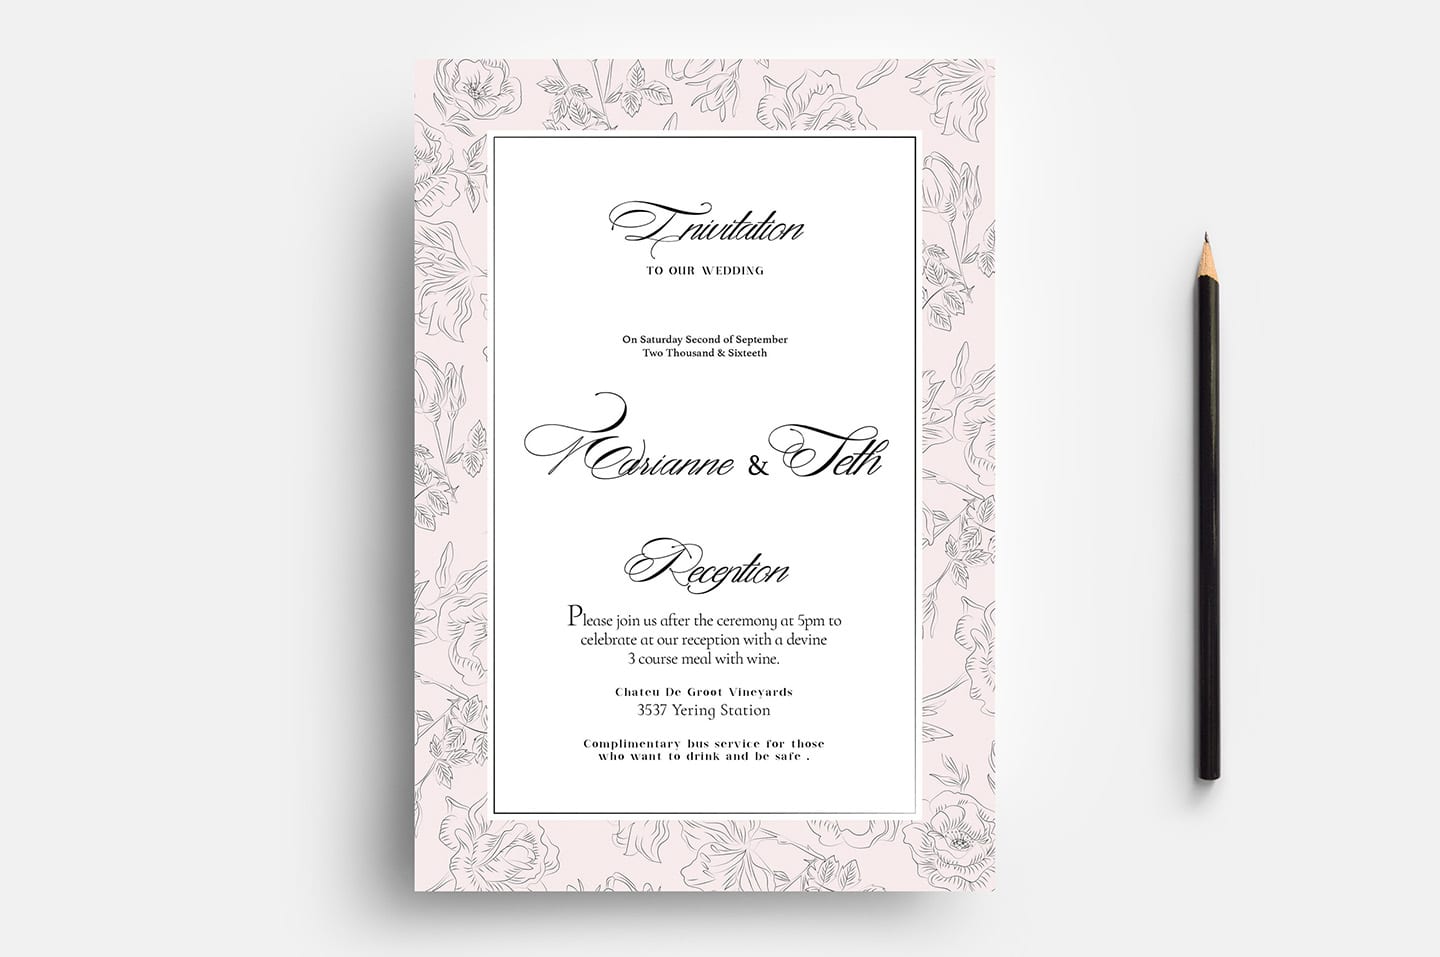  Get 45 Editable Wedding Invitation Templates Free Download